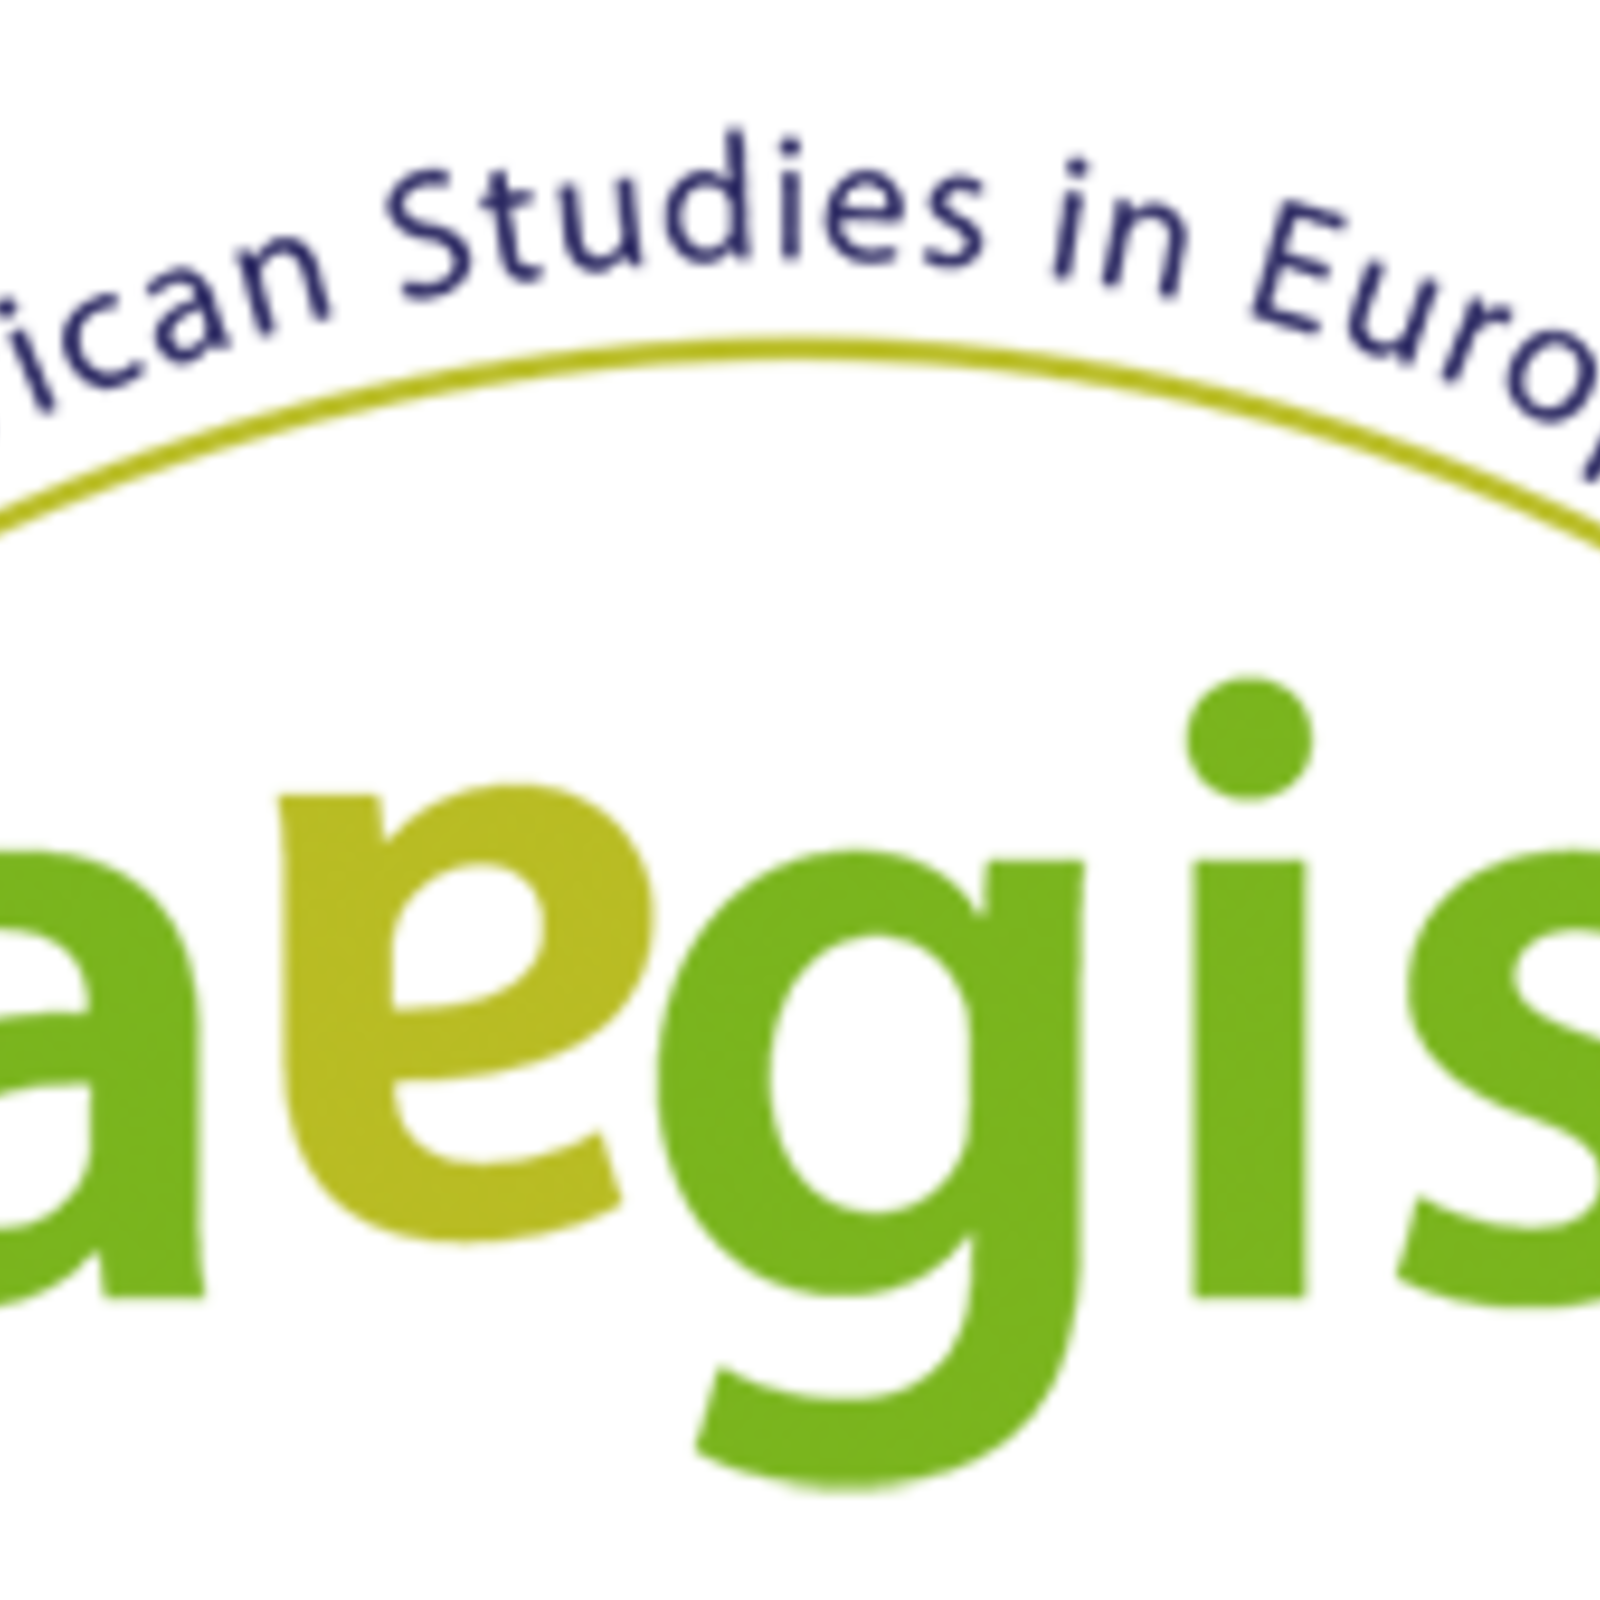 [Translate to Französisch:] Logo of the European Network of African Studies AEGIS